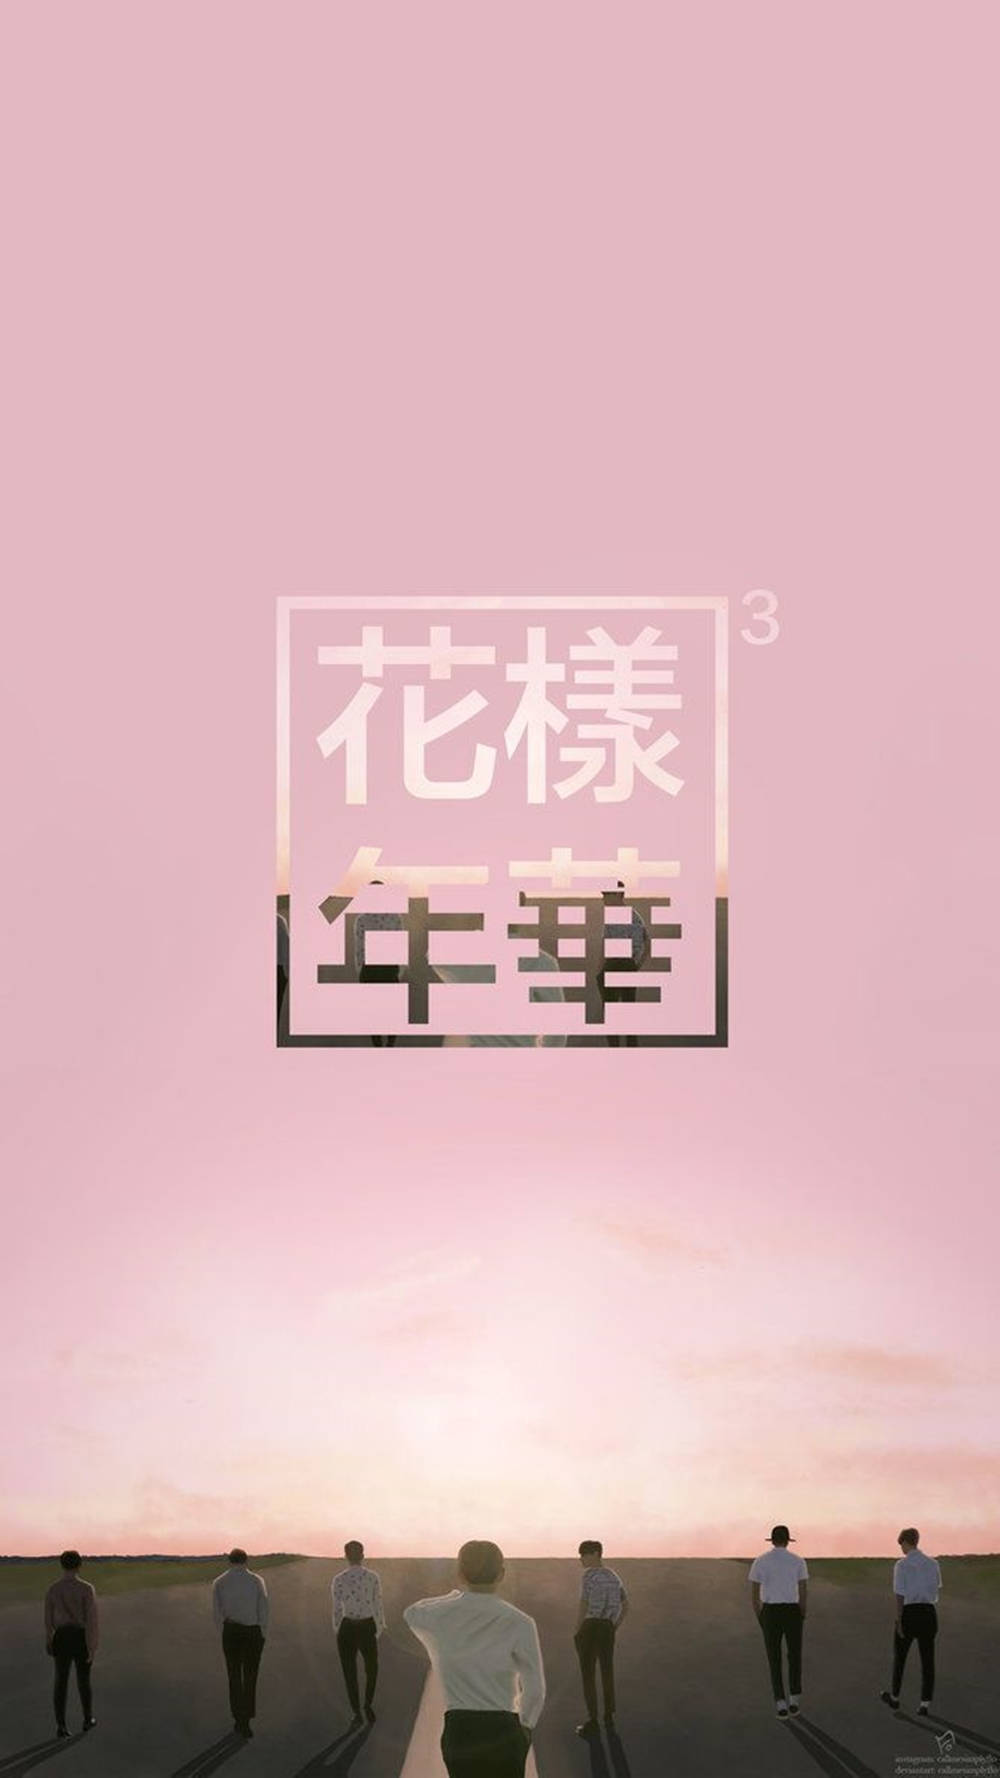 Stylish Pink Bts Phone Screen Poster